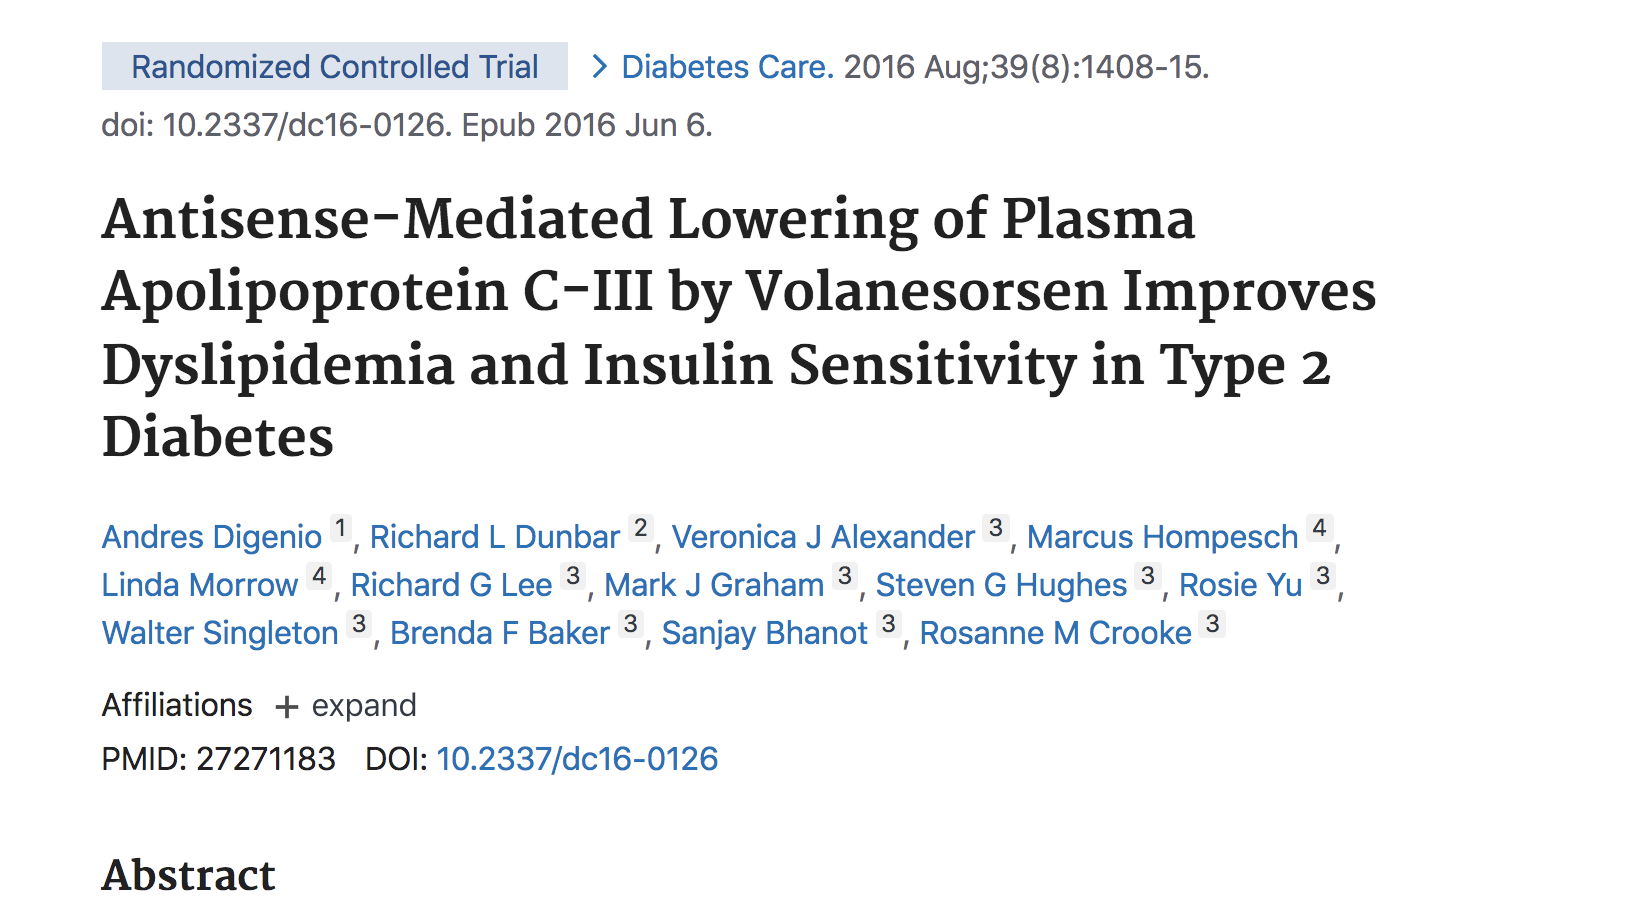 image of Antisense-Mediated Lowering of Plasma Apolipoprotein C-III by Volanesorsen Improves Dyslipidemia and Insulin Sensitivity in Type 2 Diabetes.